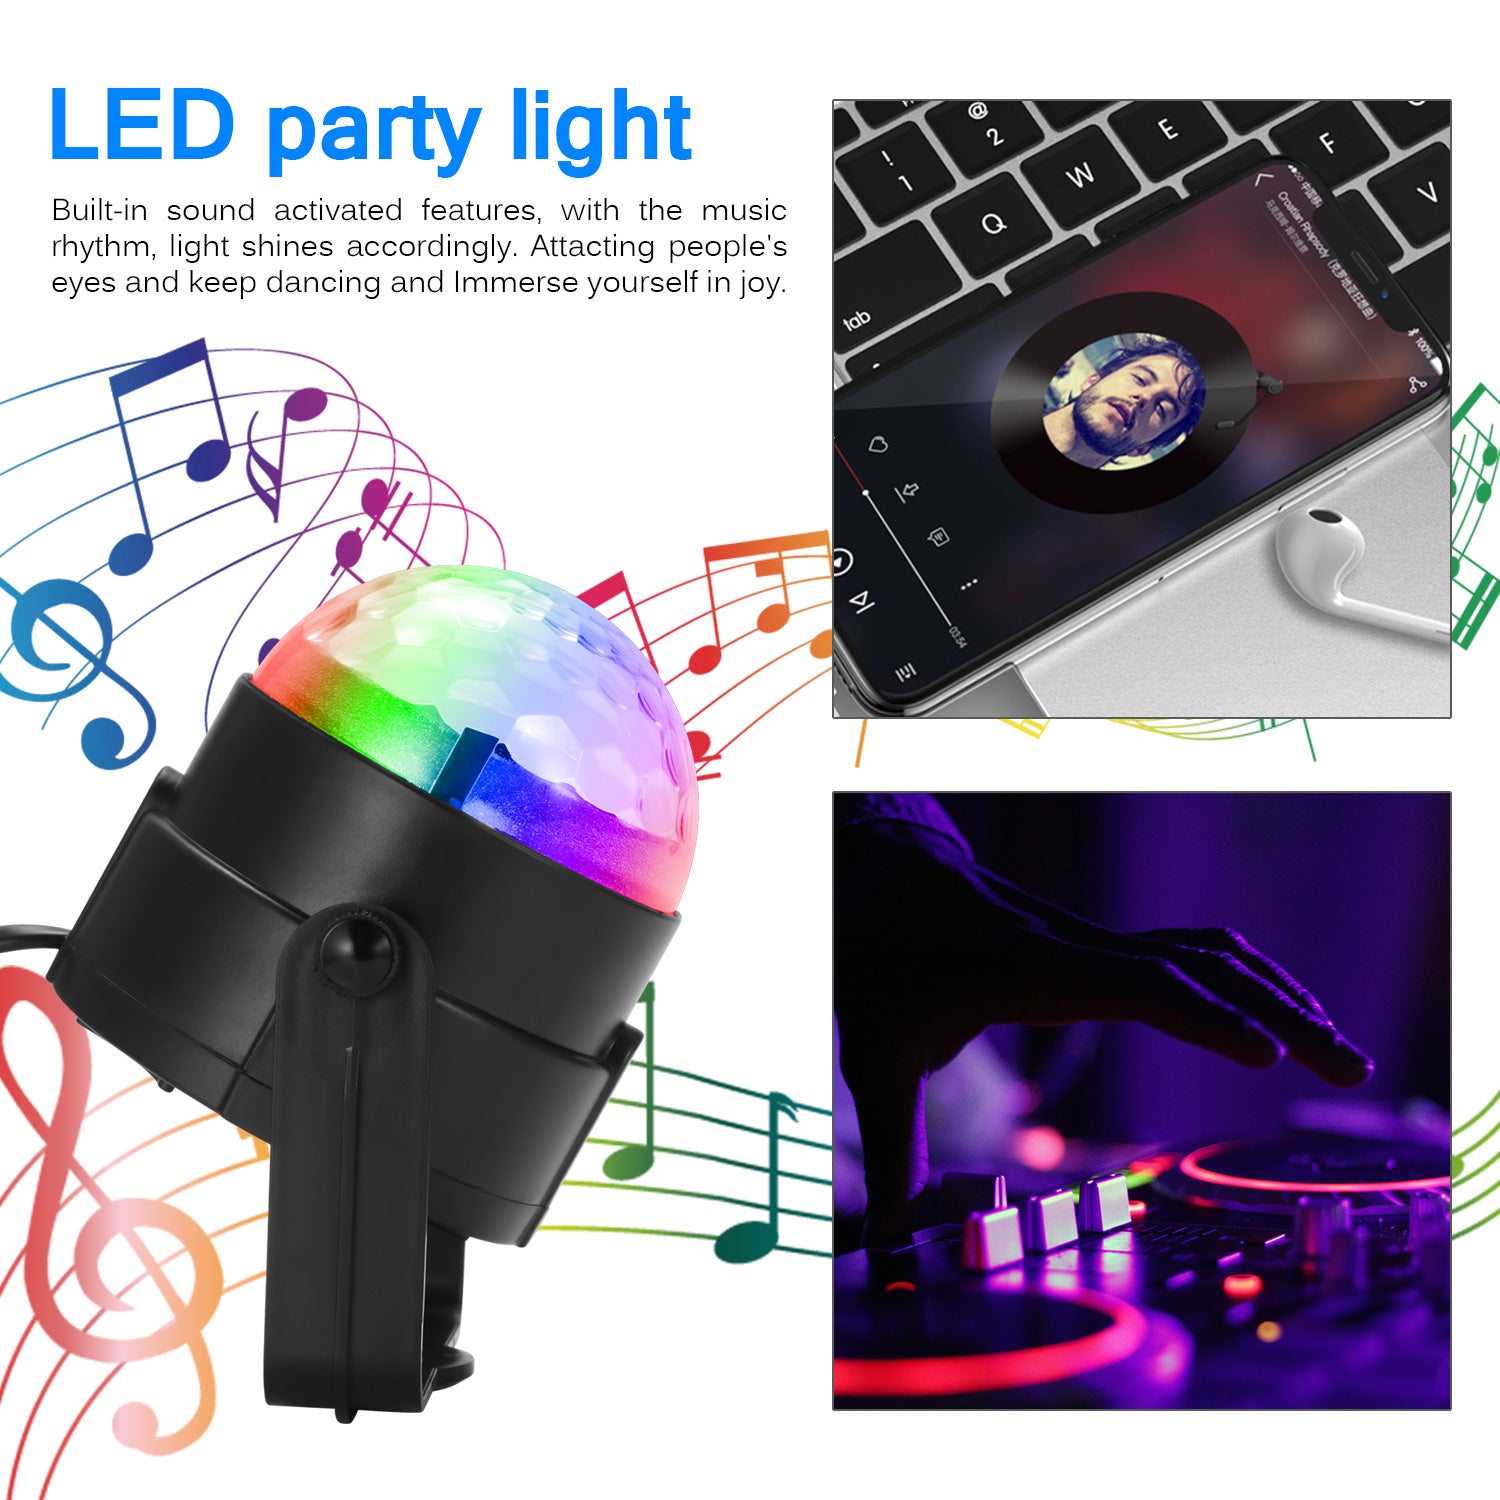 LED RGB Magic Light with Remote Control UK Plug